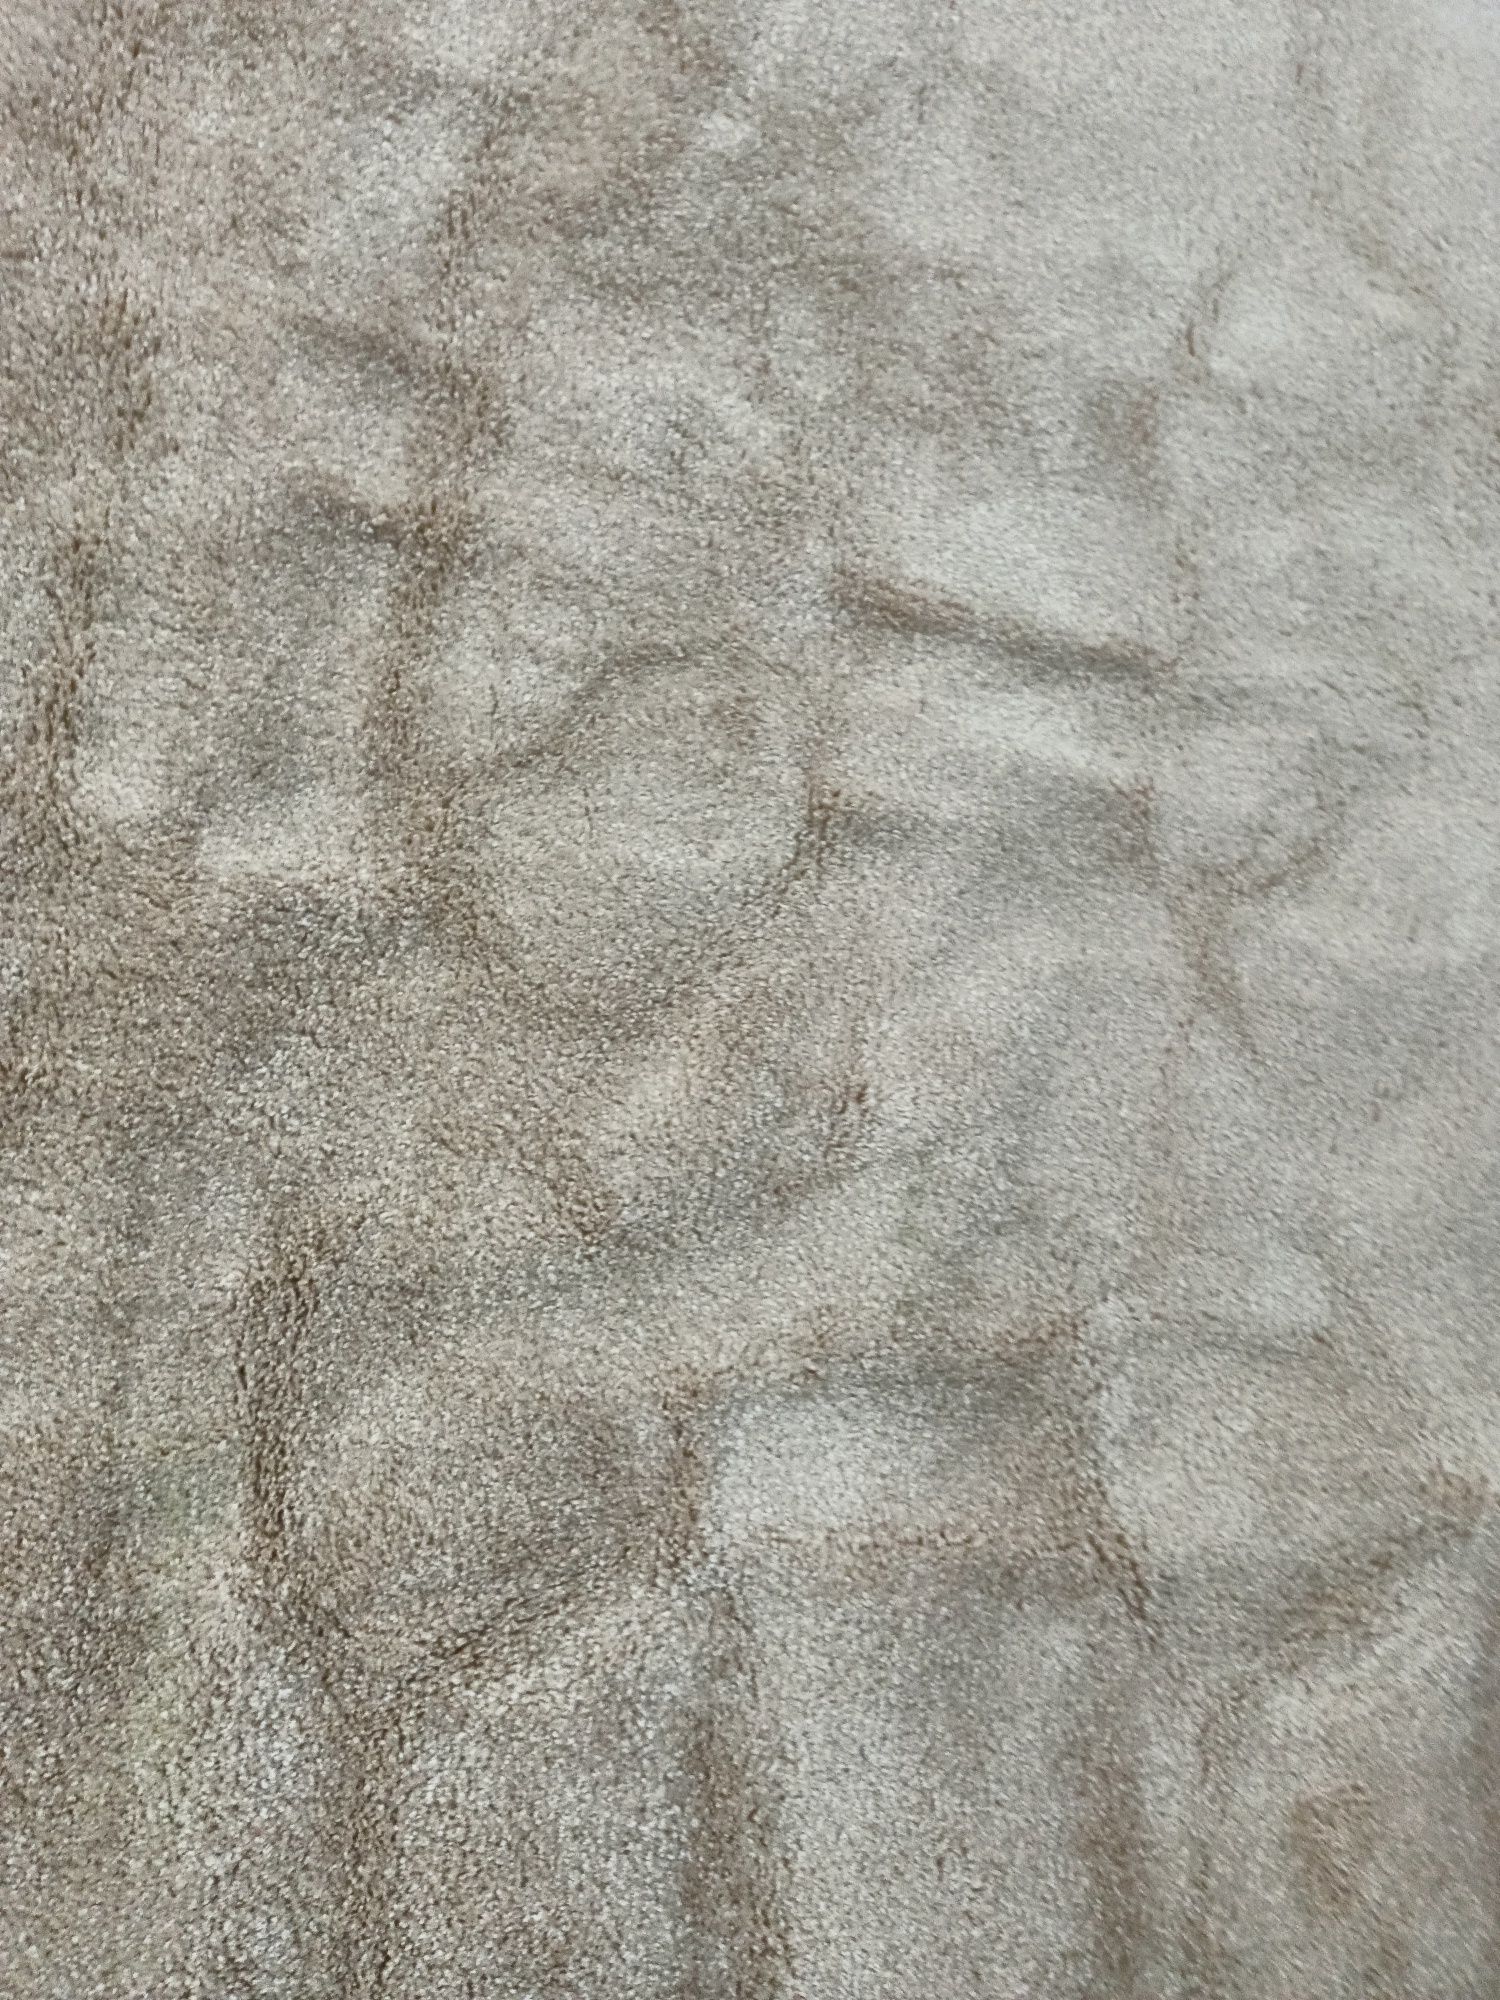 Carpete beje quase nova